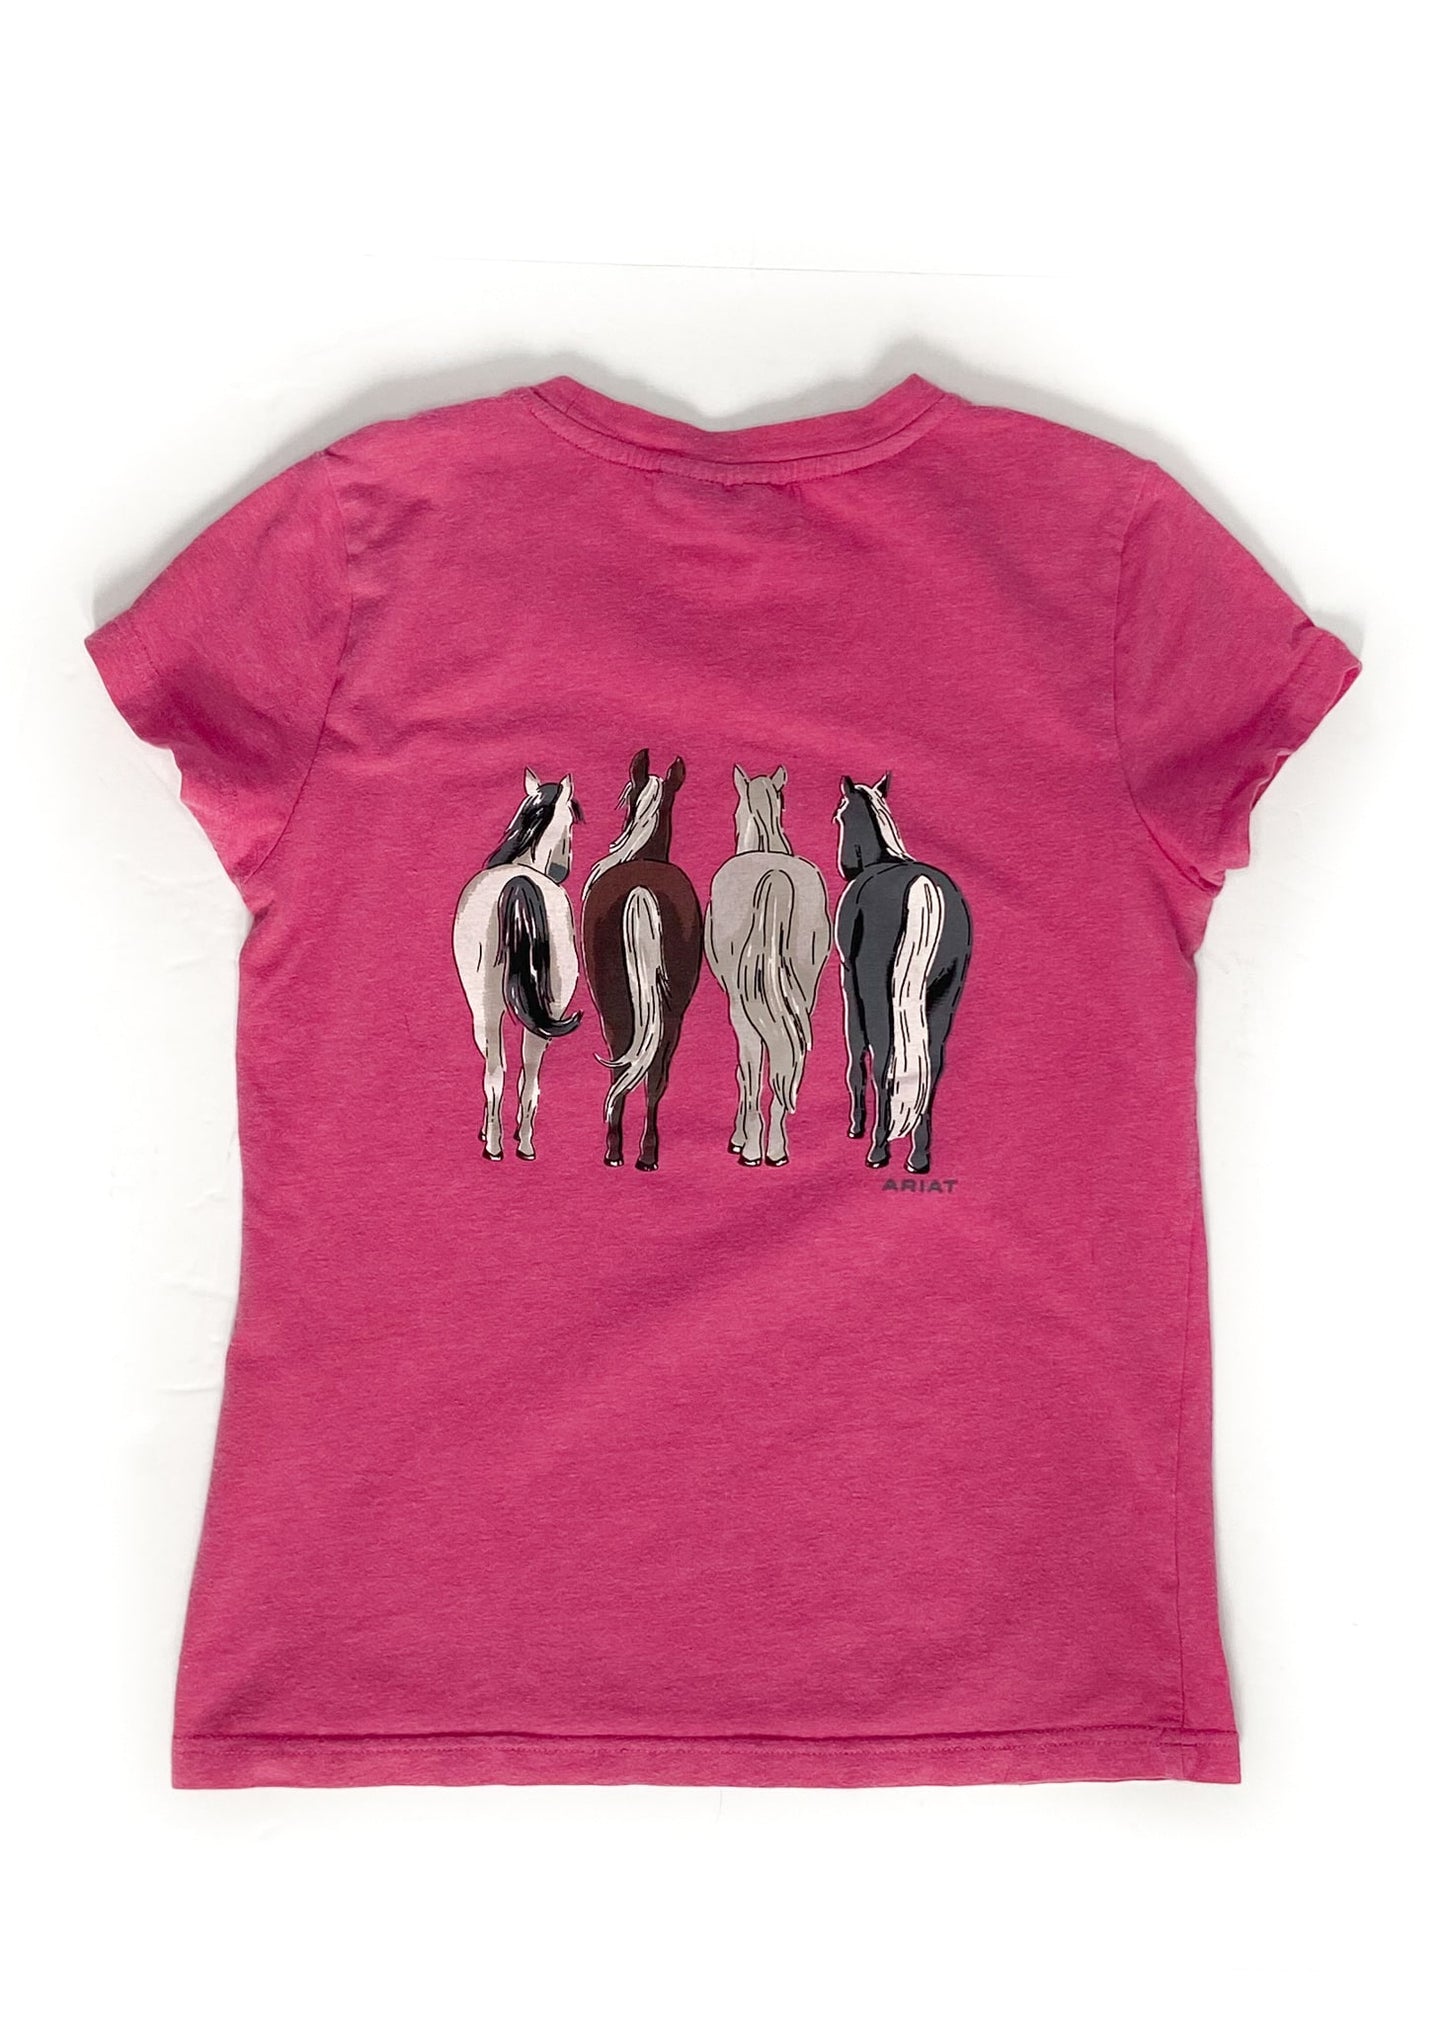 Ariat Short Sleeve Shirt - Pink - Youth Large